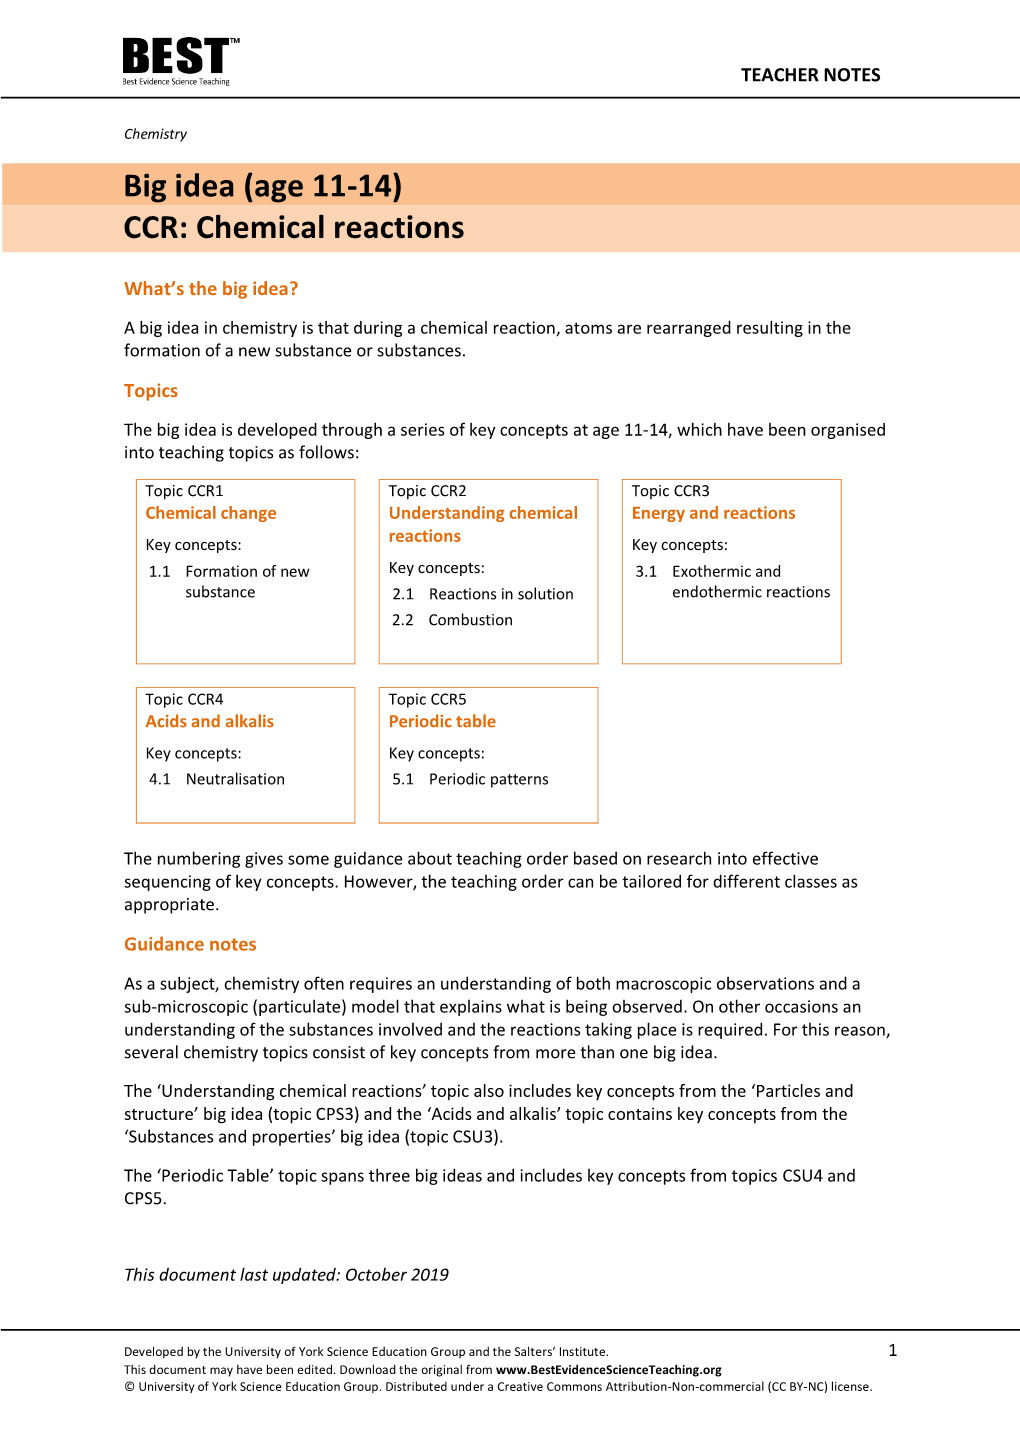 Big Idea (Age 11-14) CCR: Chemical Reactions